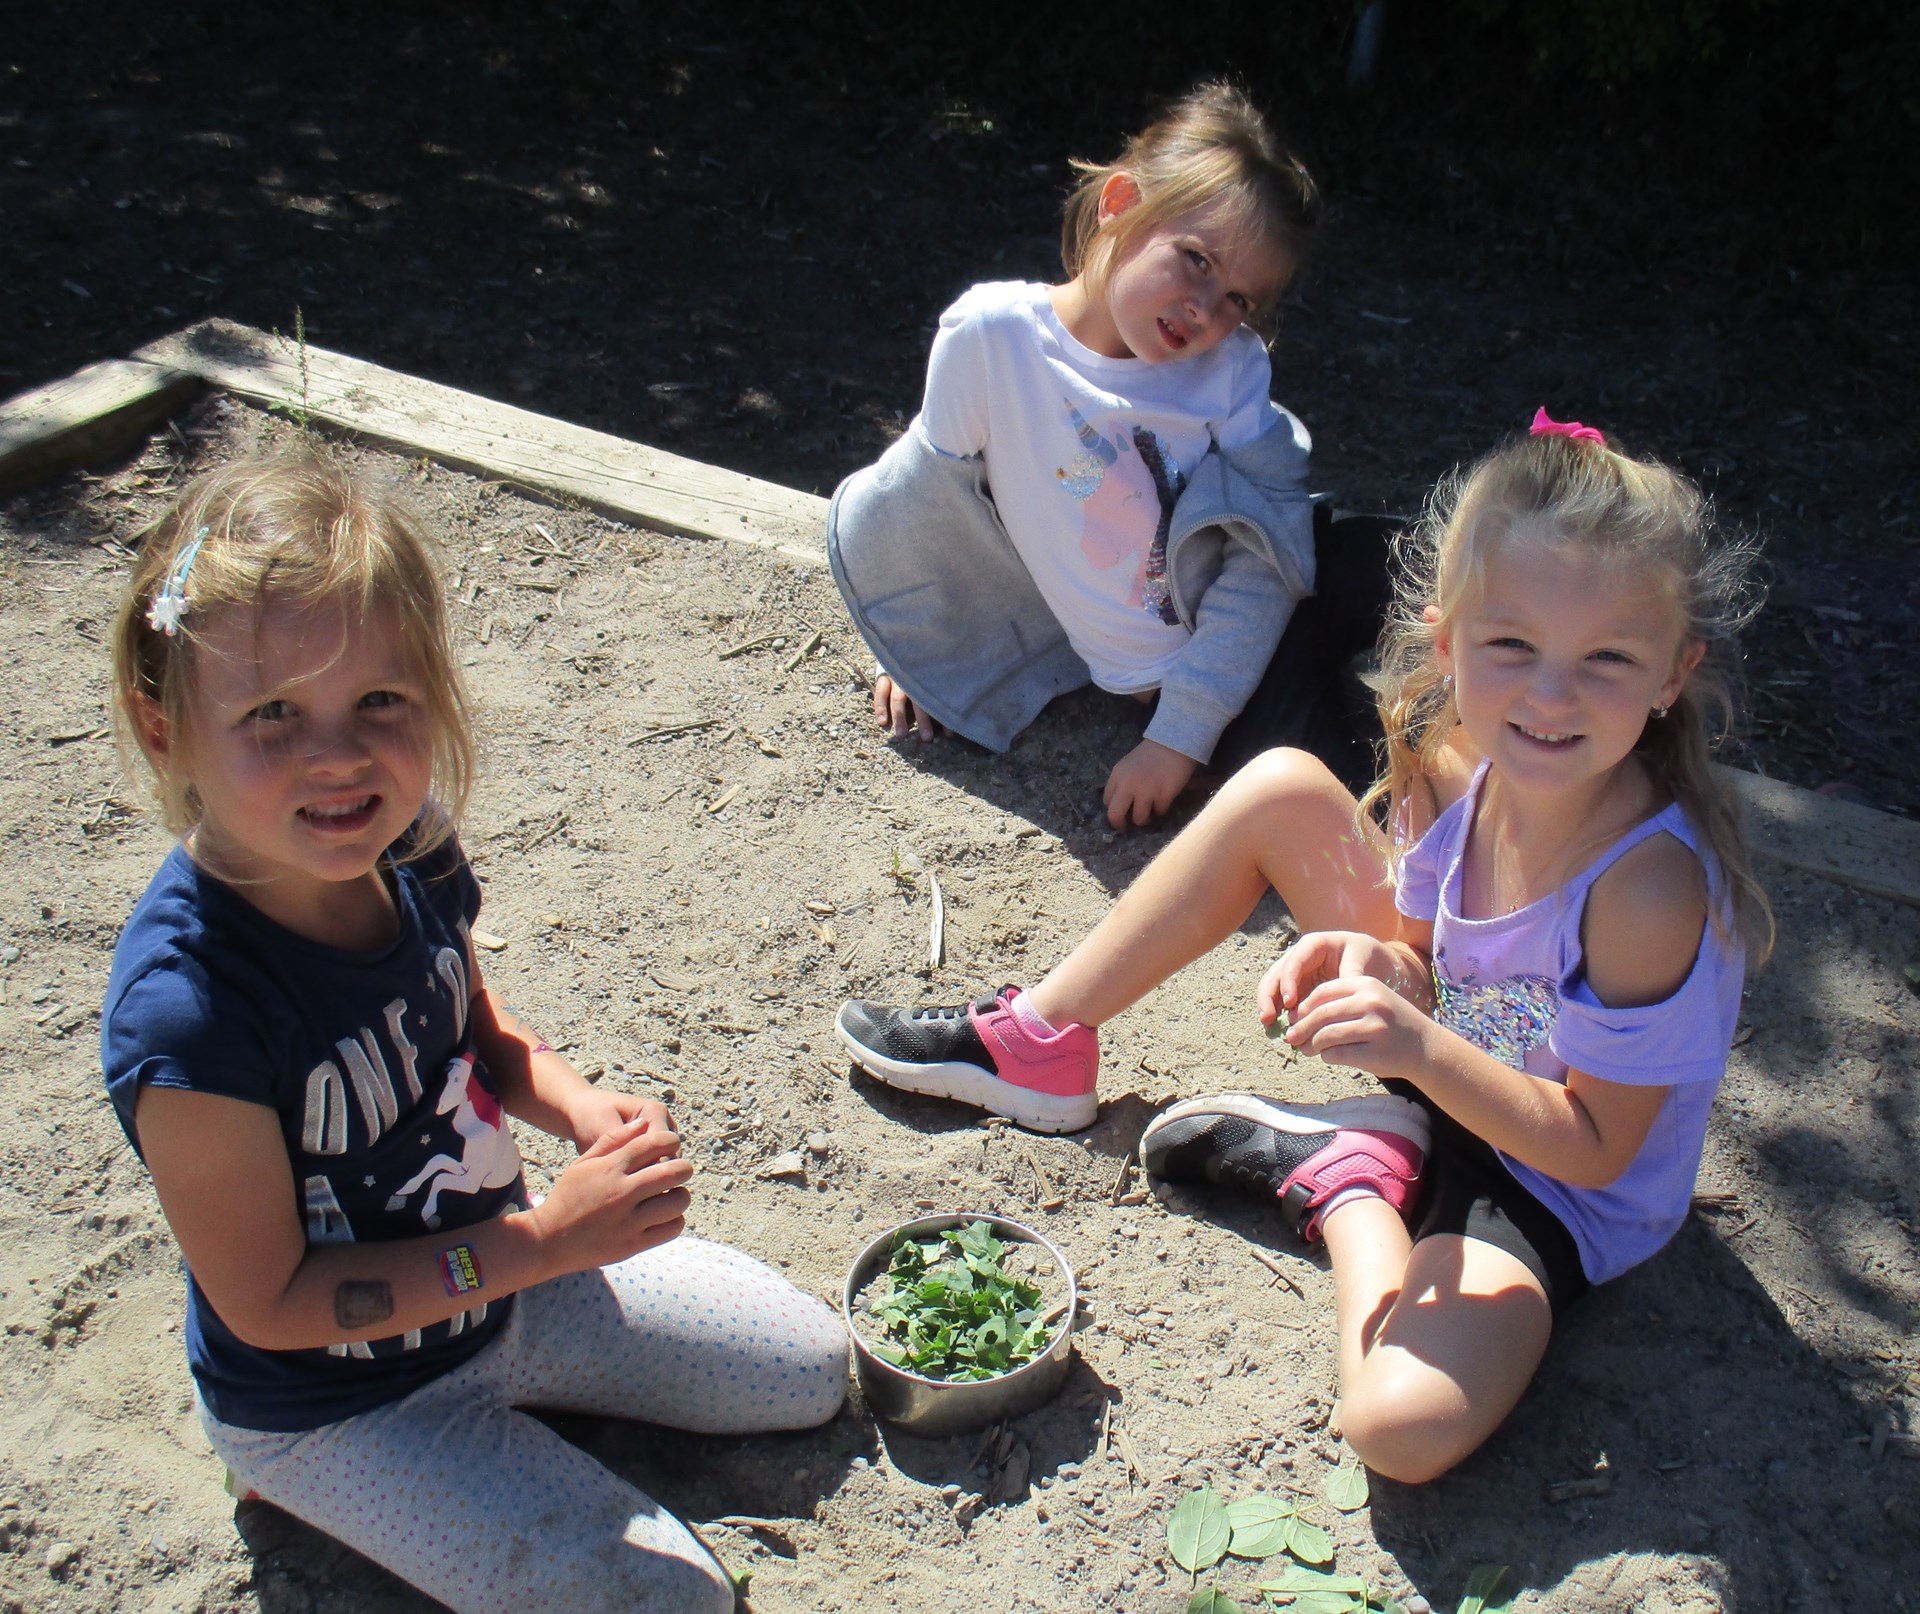 Students playing in sandbox.